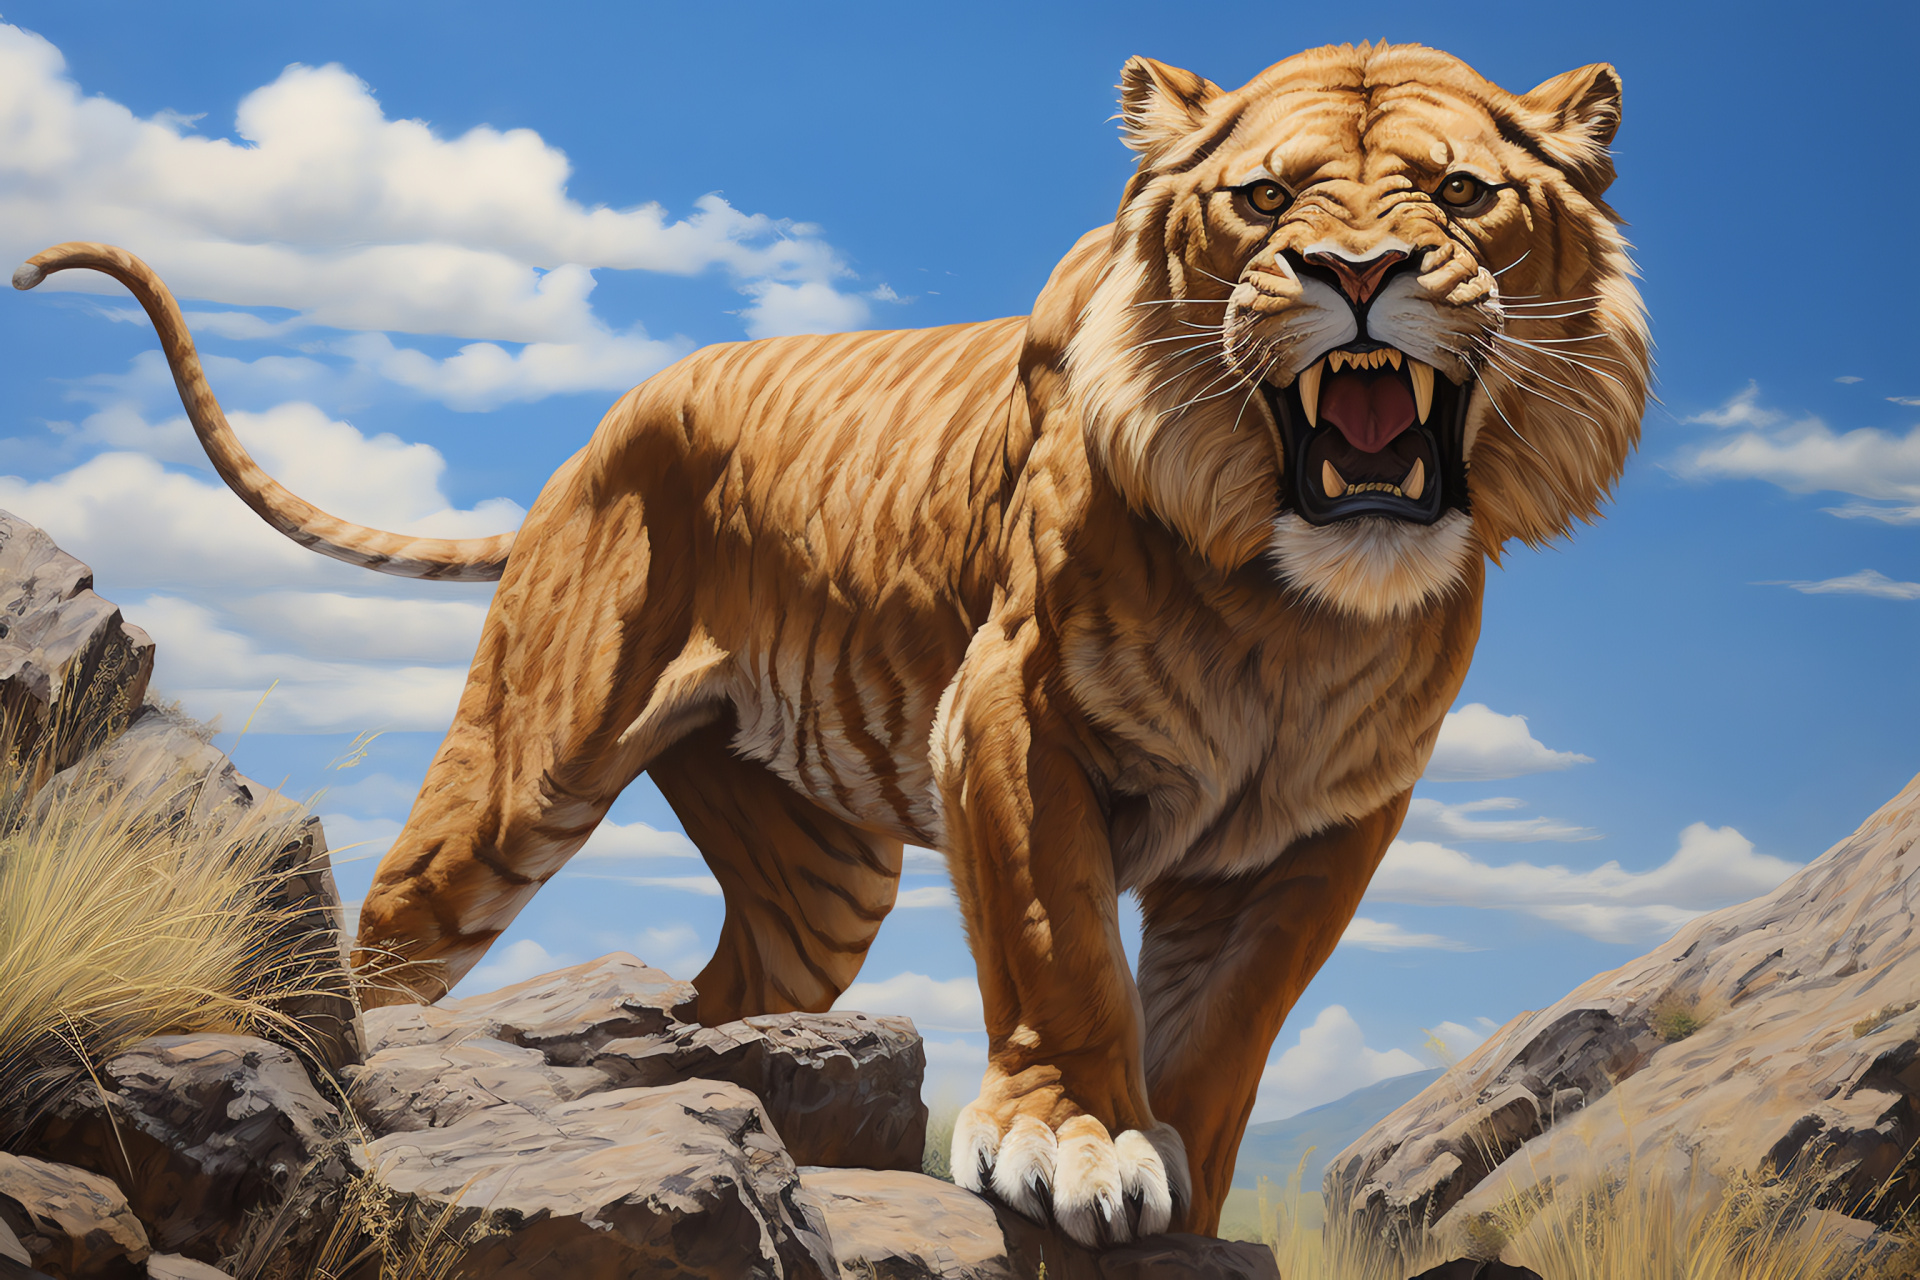 Saber Tooth Tiger, razor-sharp teeth, blue eyes, sandy brown, shaggy coat, prehistoric climate, HD Desktop Image